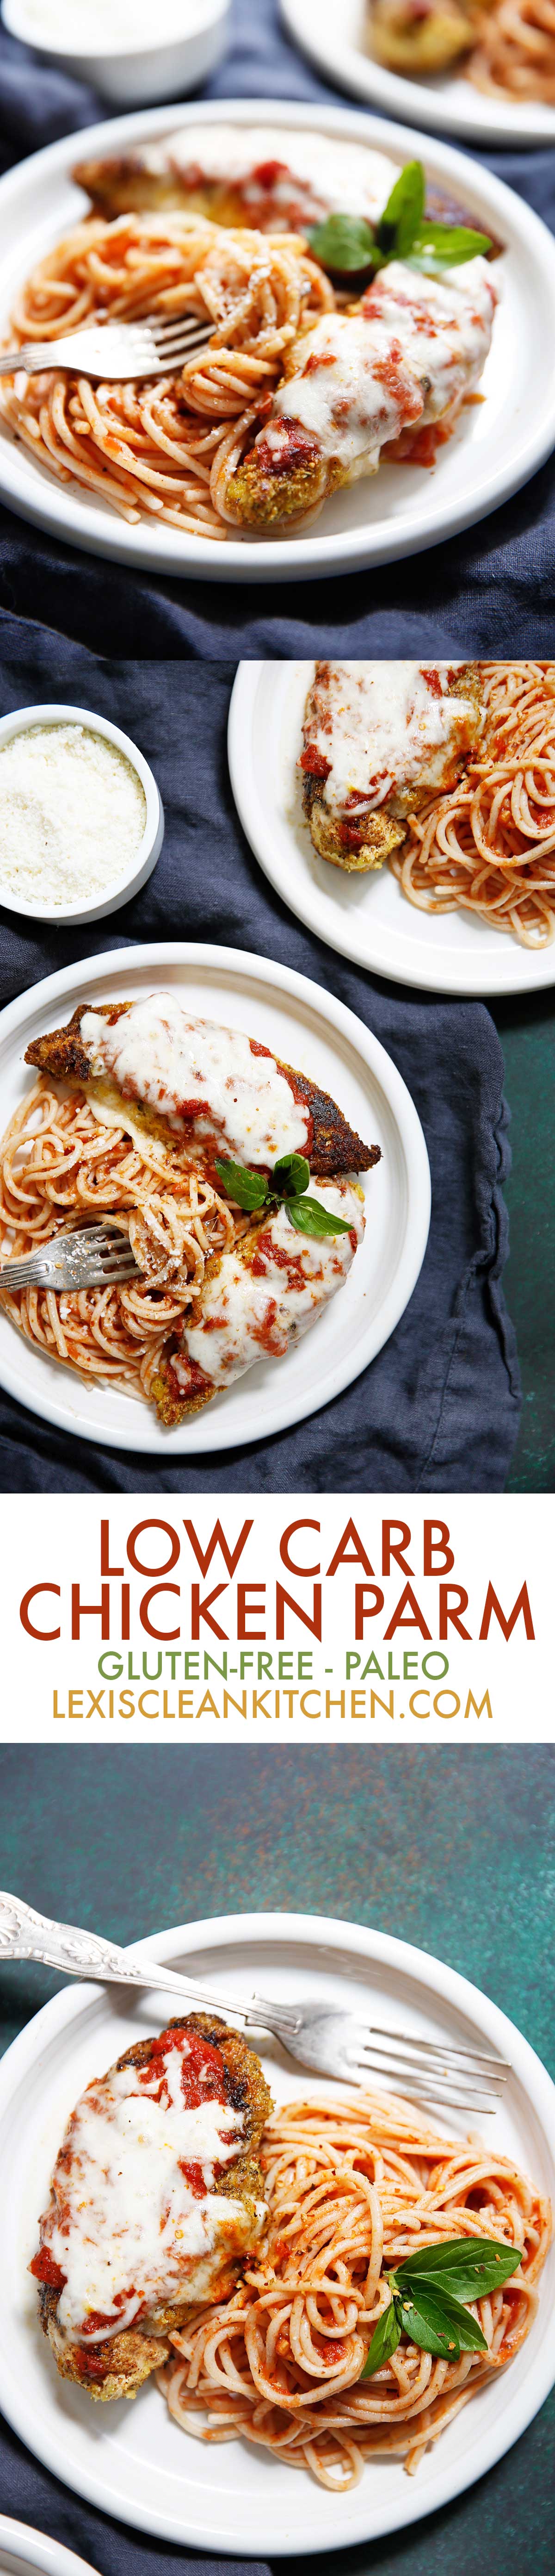 Low Carb Chicken Parmesan (keto, paleo) - Lexi's Clean Kitchen